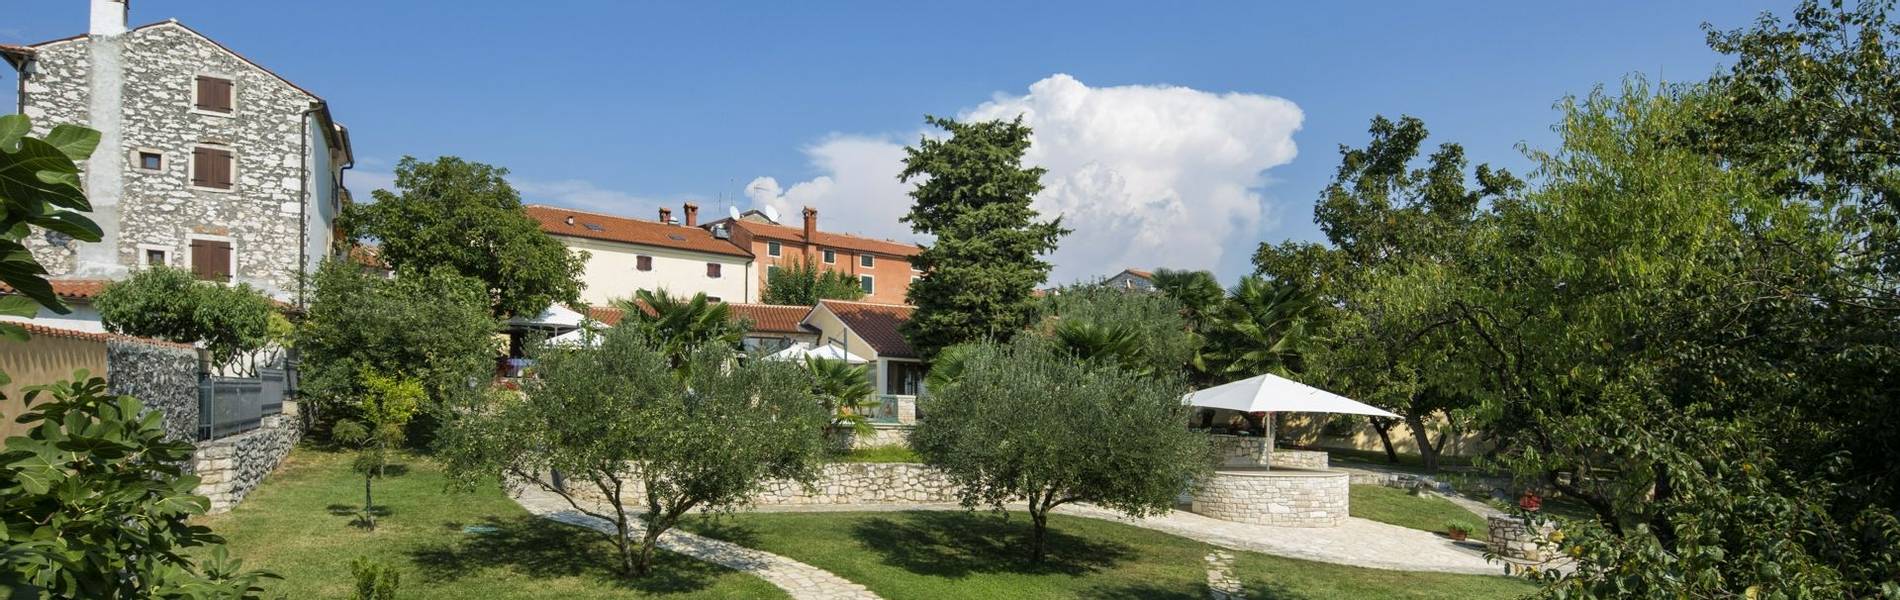 Heritage Hotel San Rocco, Istra, Croatia (4).jpg